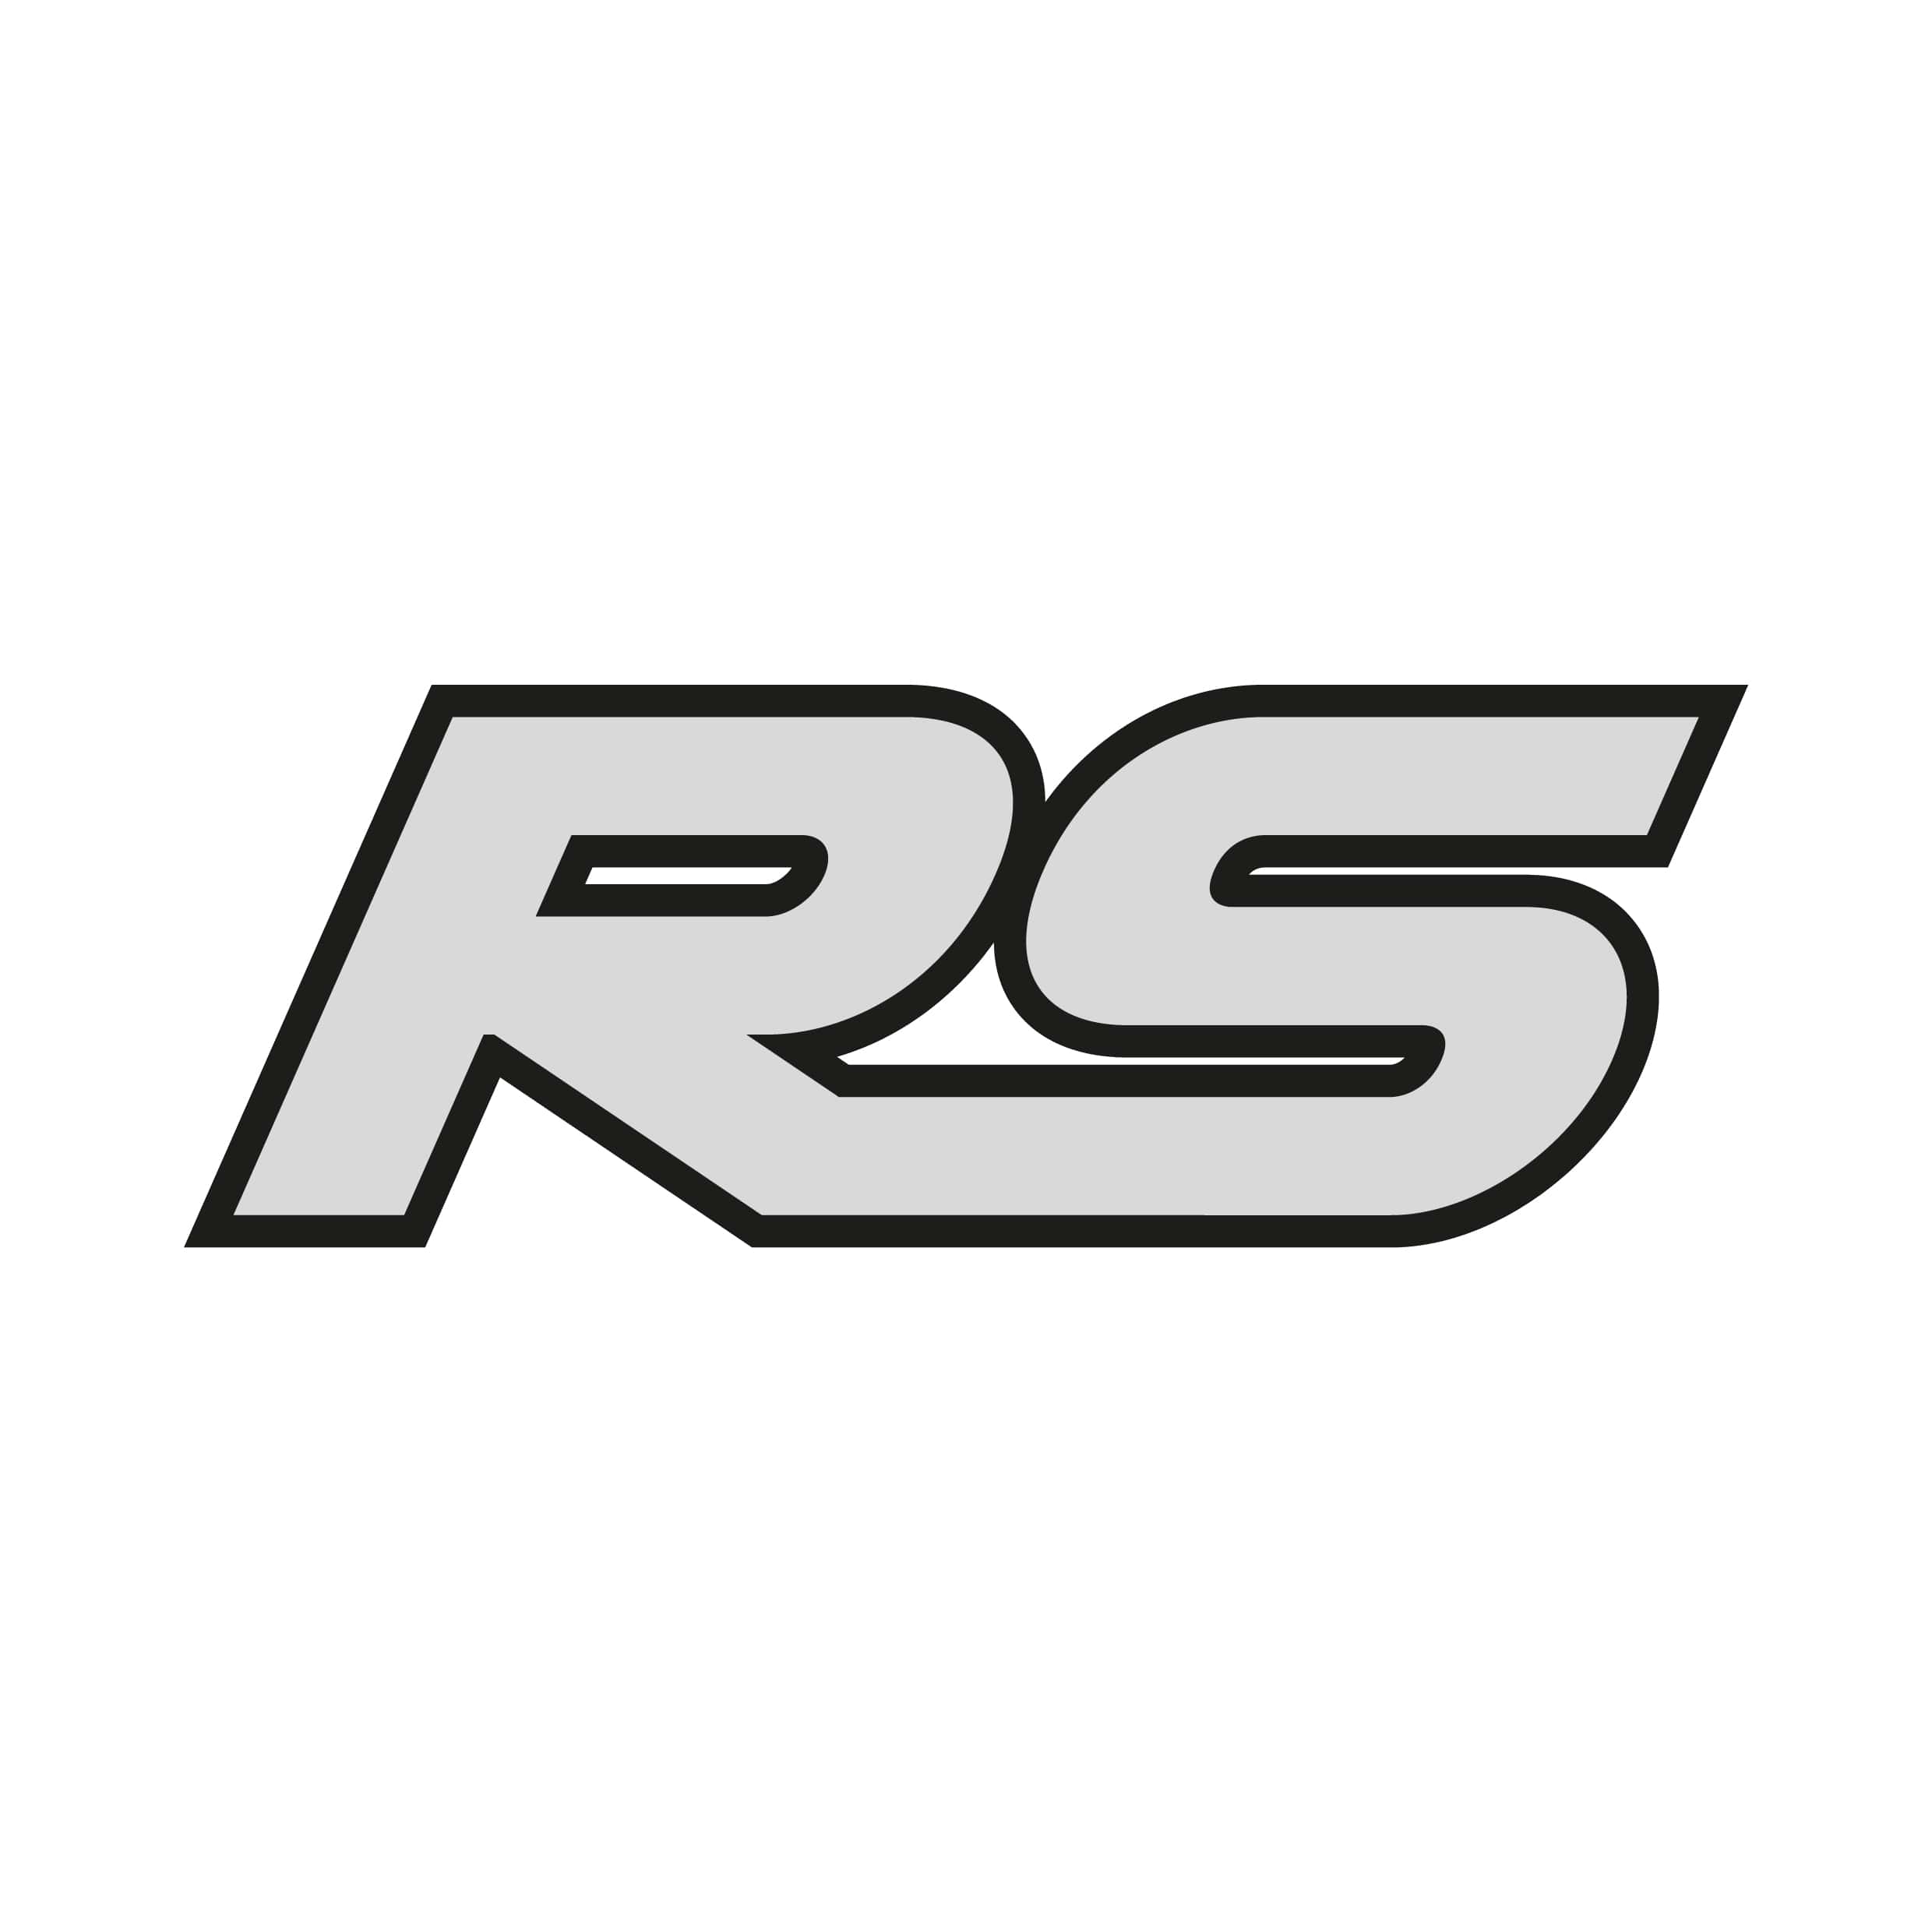 stickers-skoda-rs-ref12-autocollant-voiture-sticker-auto-autocollants-decals-sponsors-racing-tuning-sport-logo-min